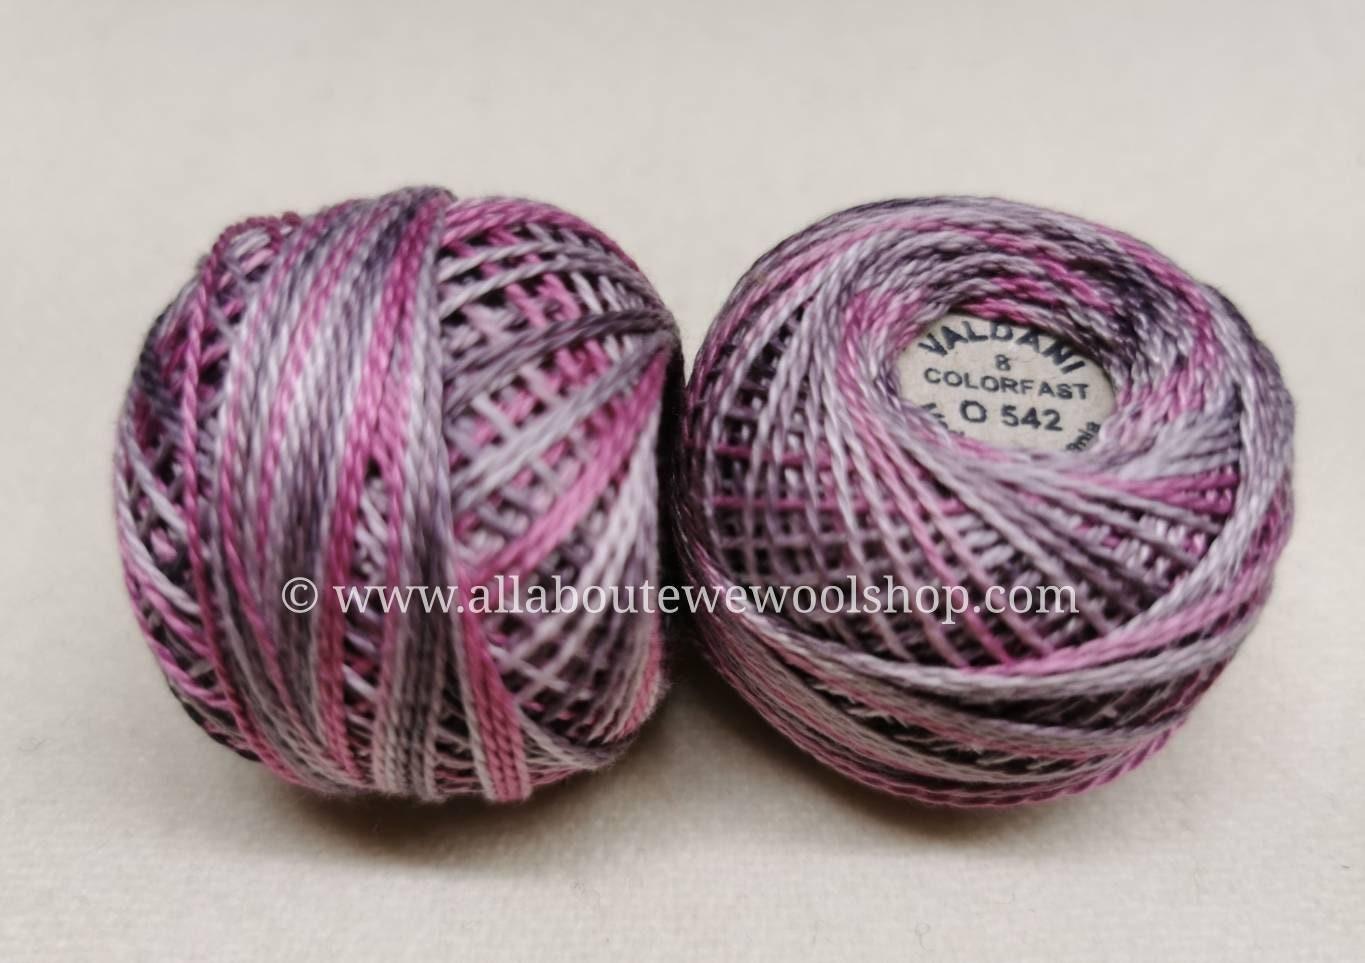 O542 #8 Valdani Pearl/Perle Cotton Thread - All About Ewe Wool Shop